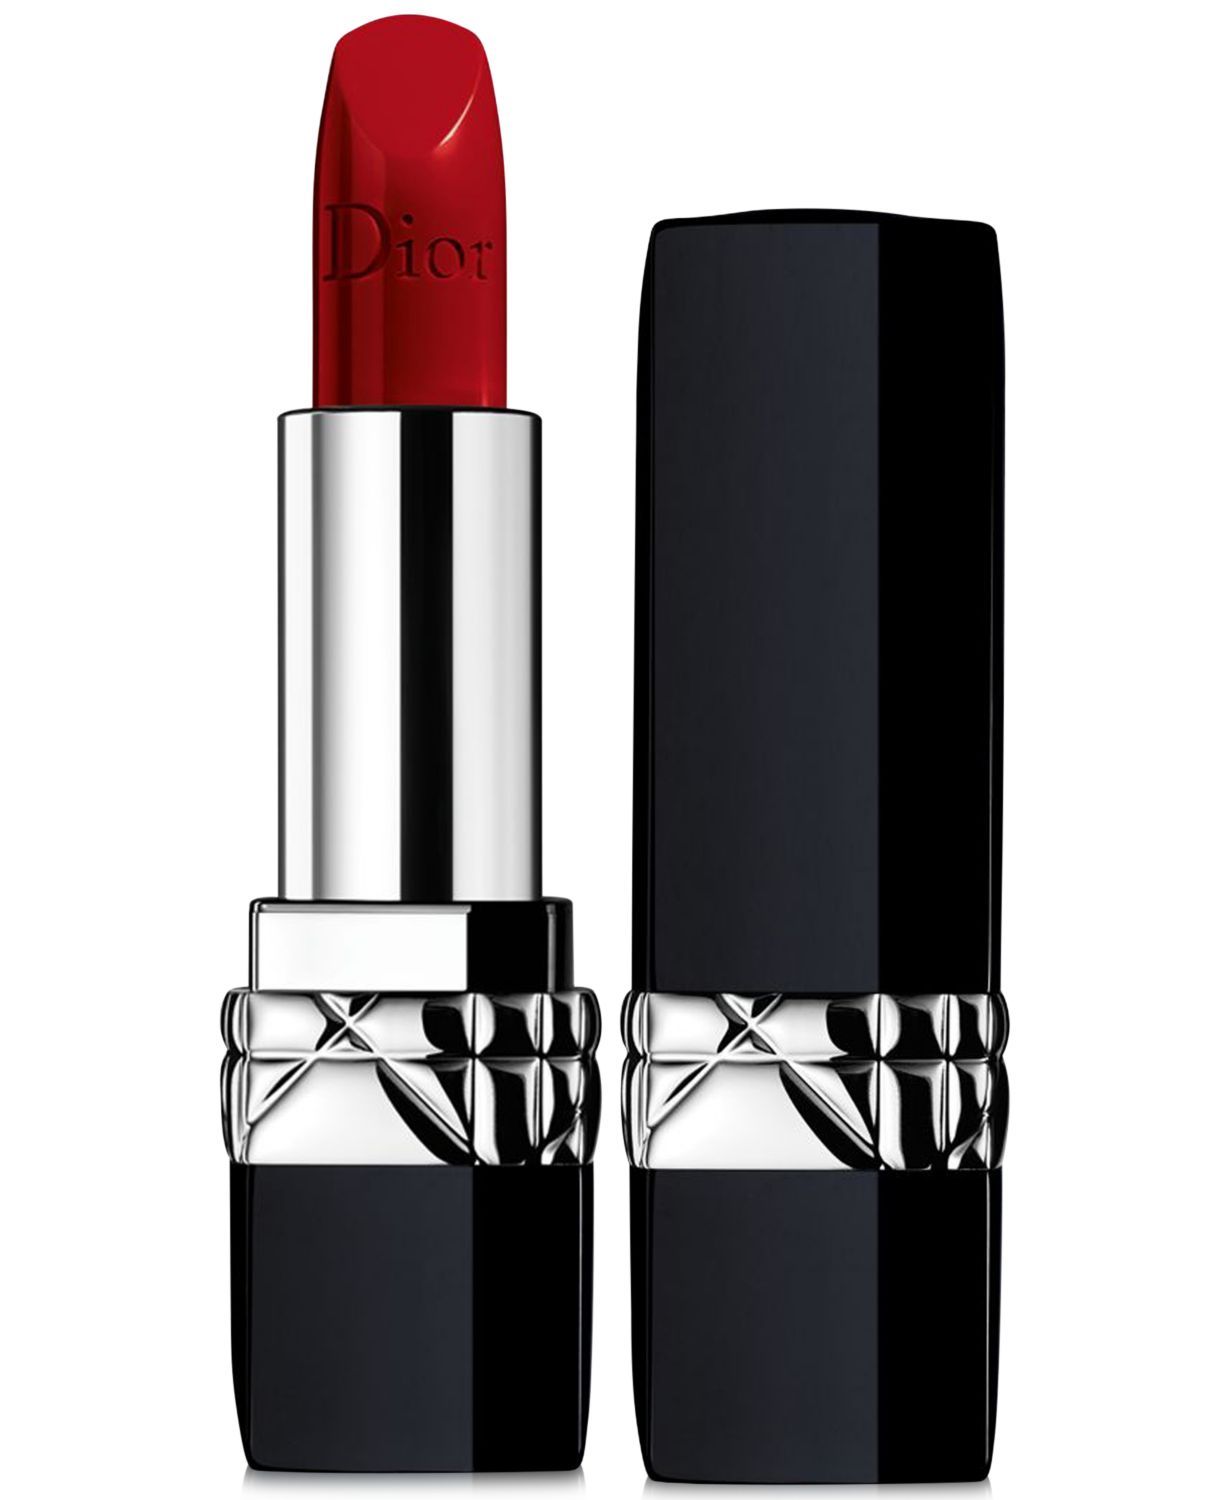 christian dior lipsticks online